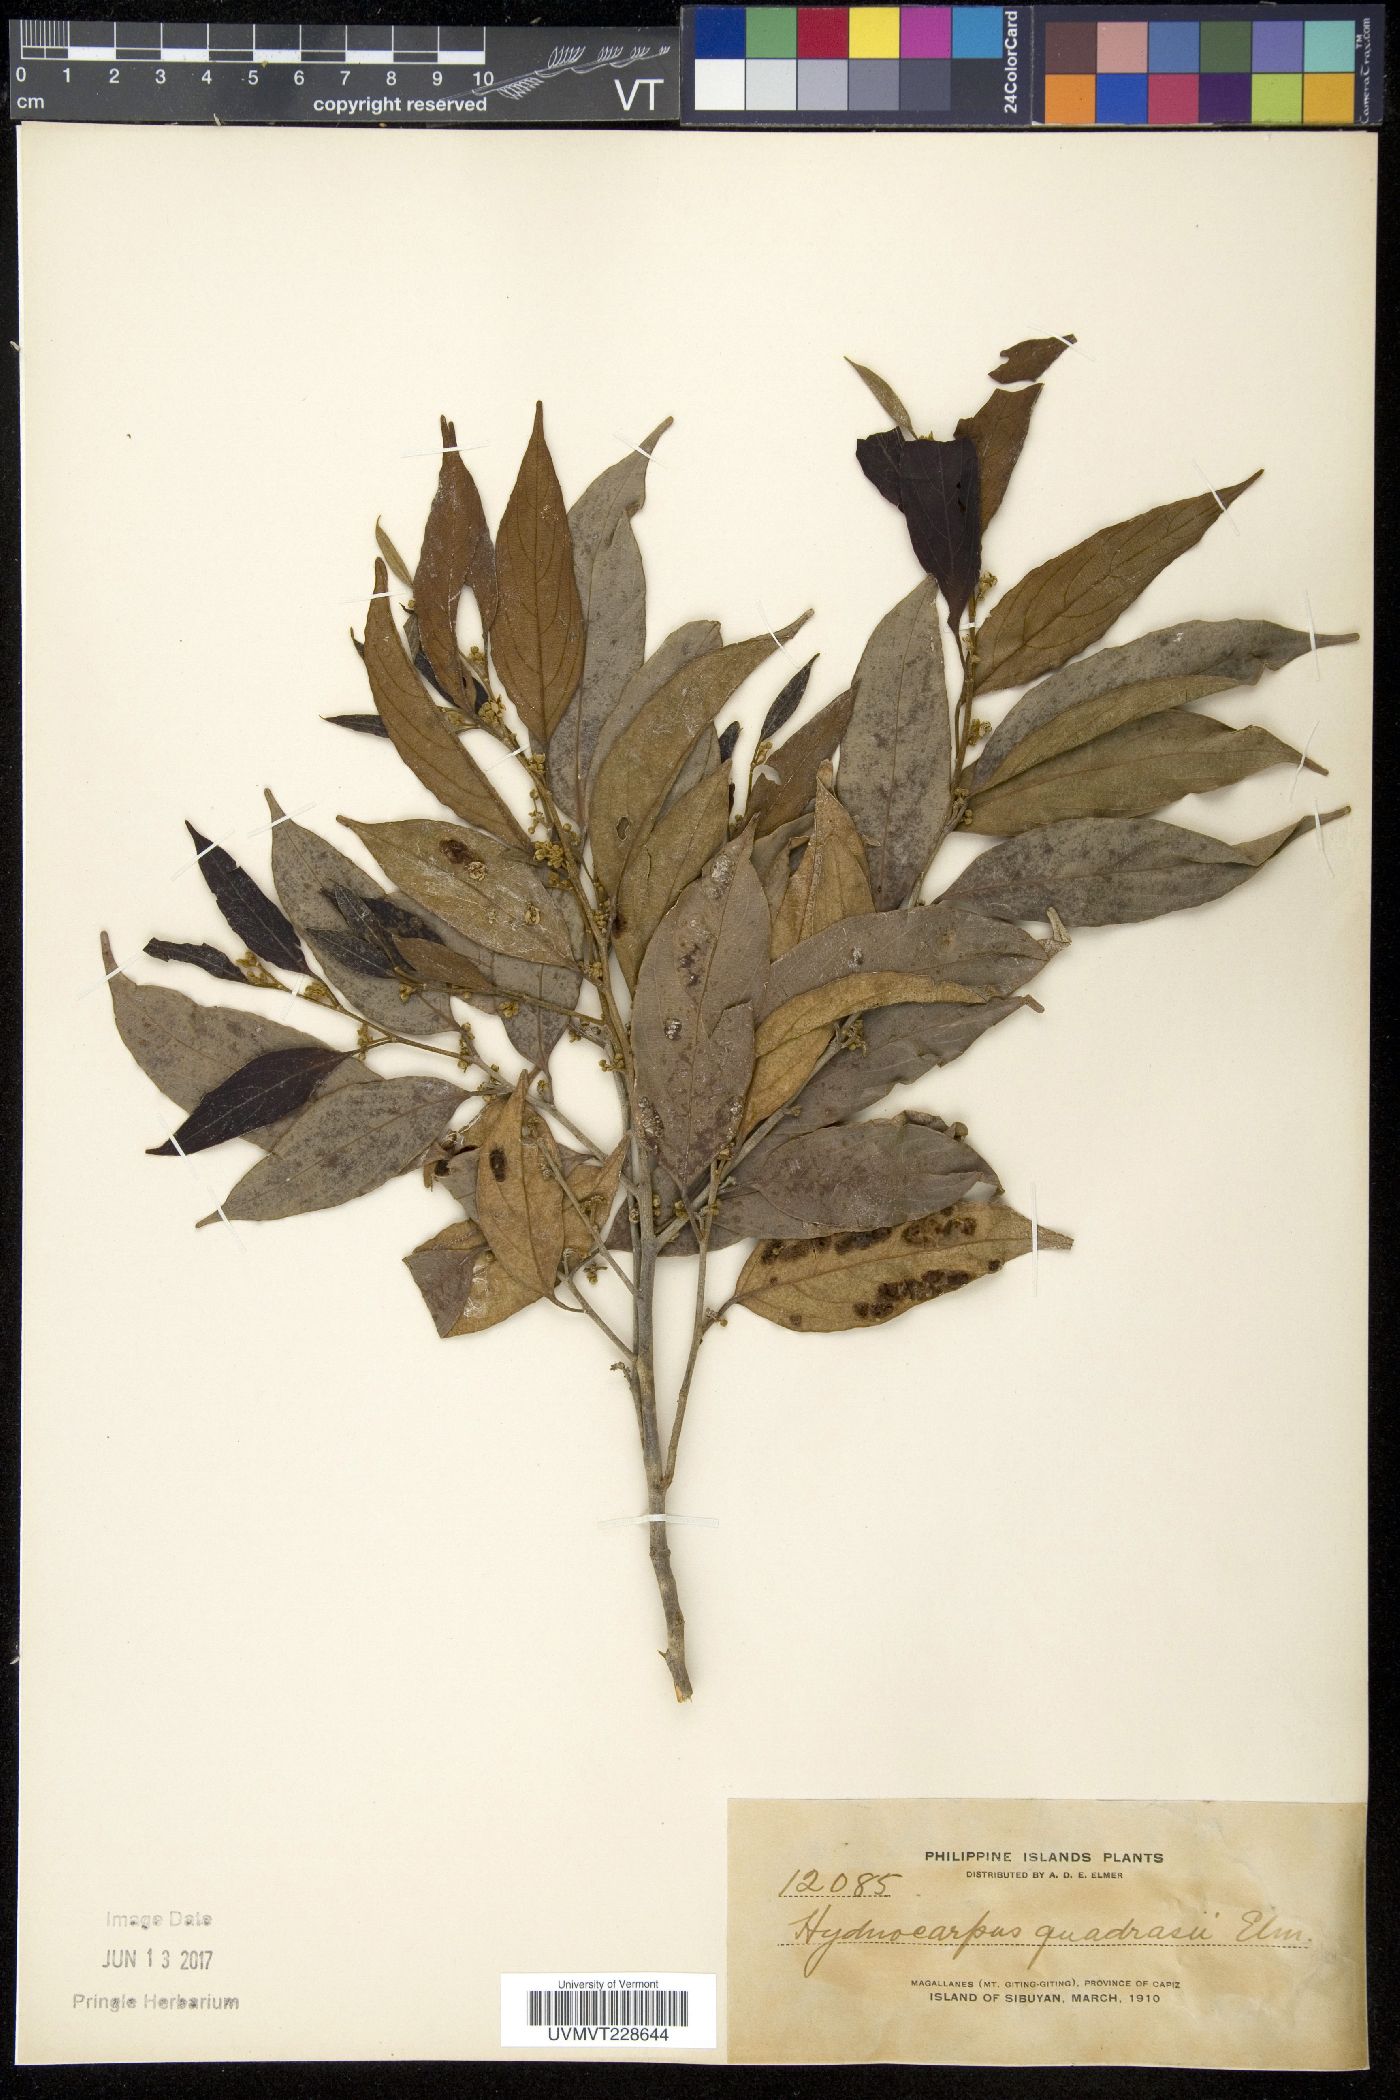 Hydnocarpus image